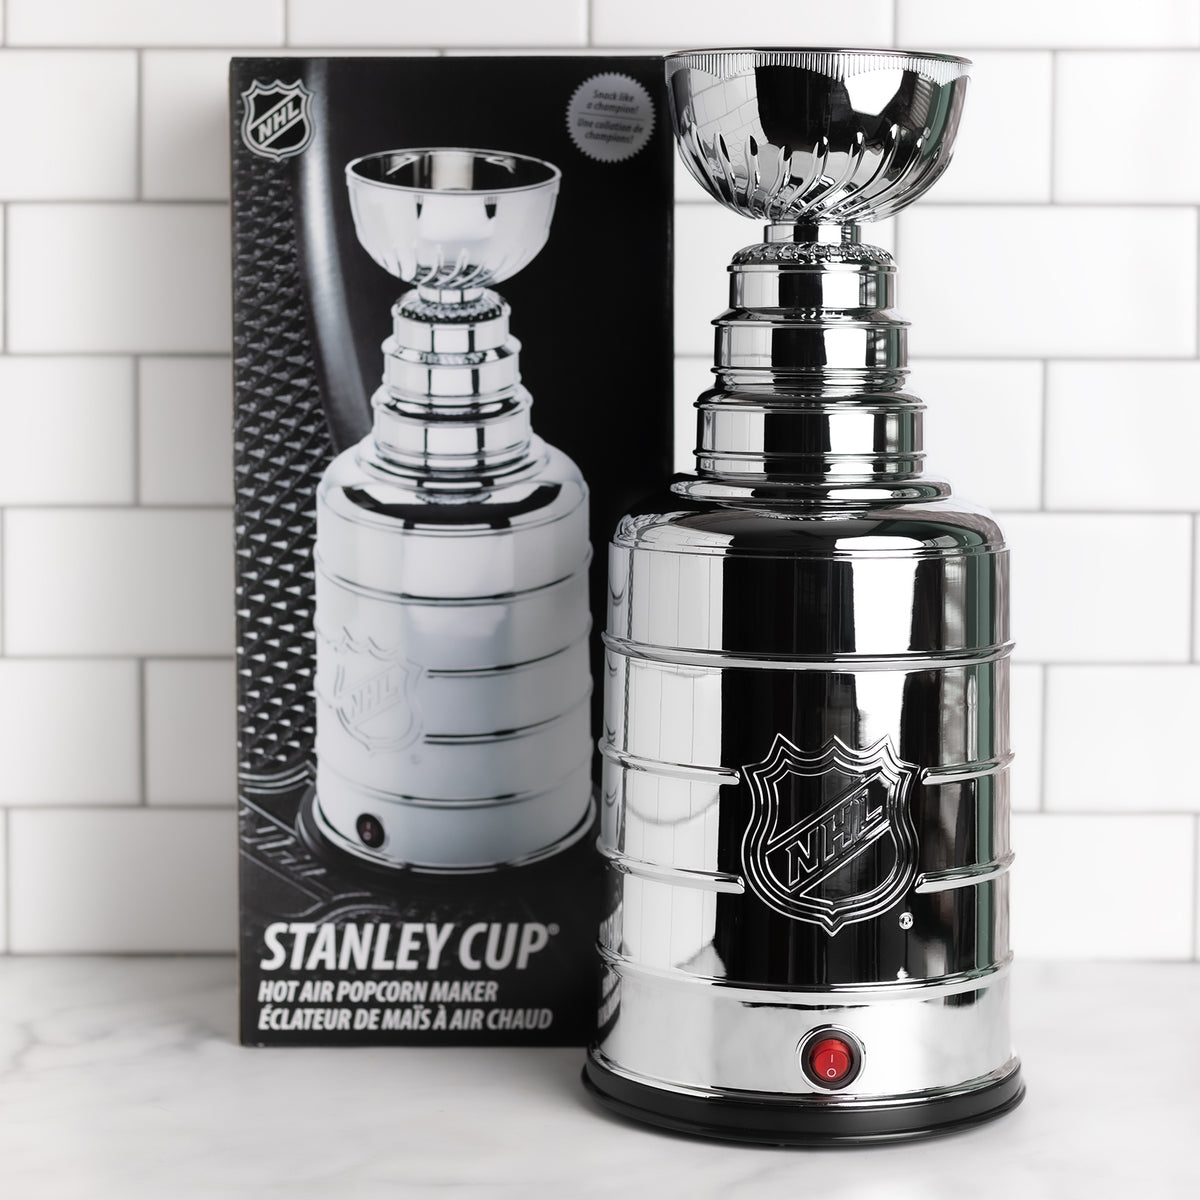 Mini Stanley Cup Trophy